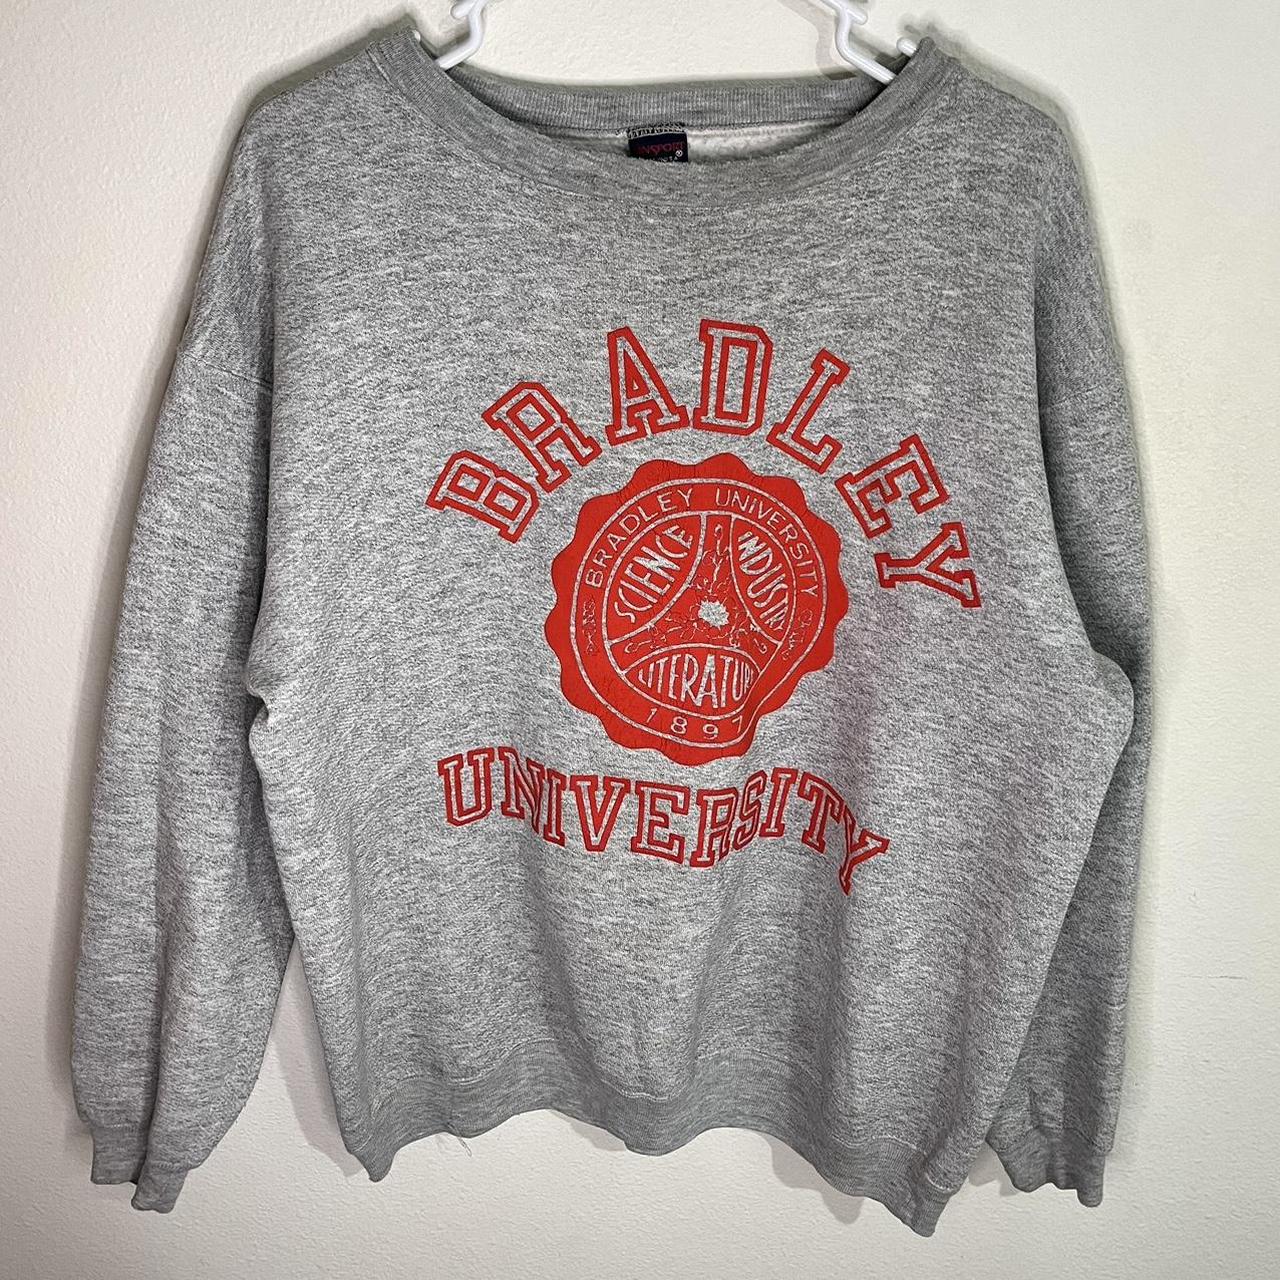 Bradley University Long Sleeve Shirts, Bradley University Long